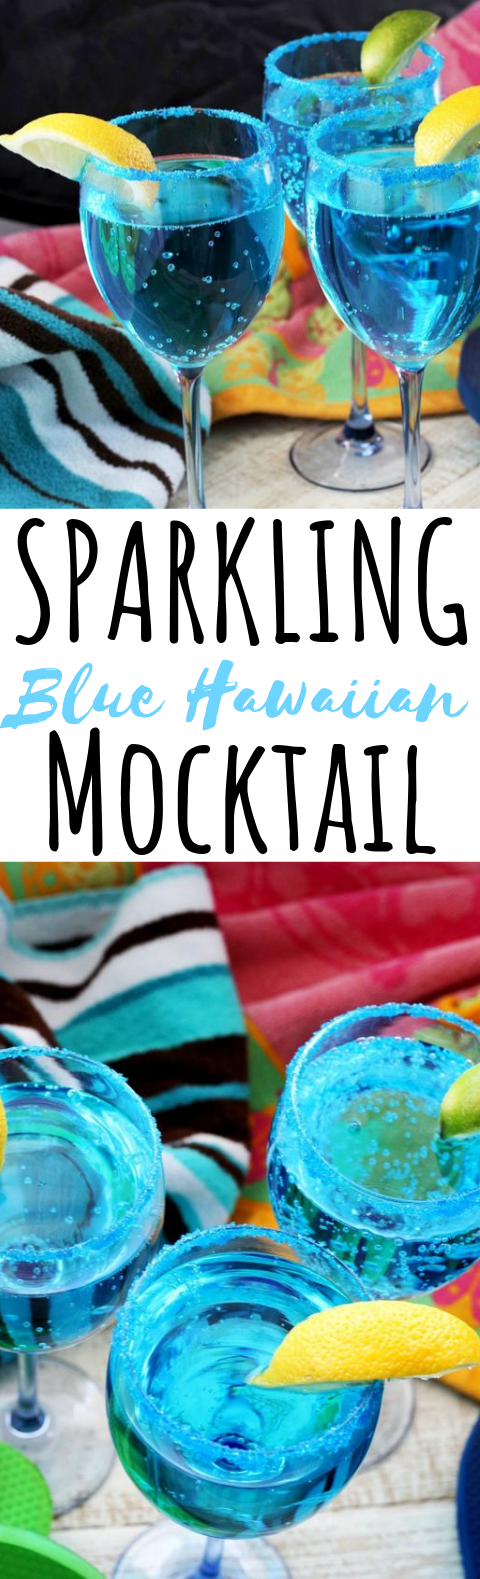 Sparkling Blue Hawaiian Mocktail #drinks #cocktails